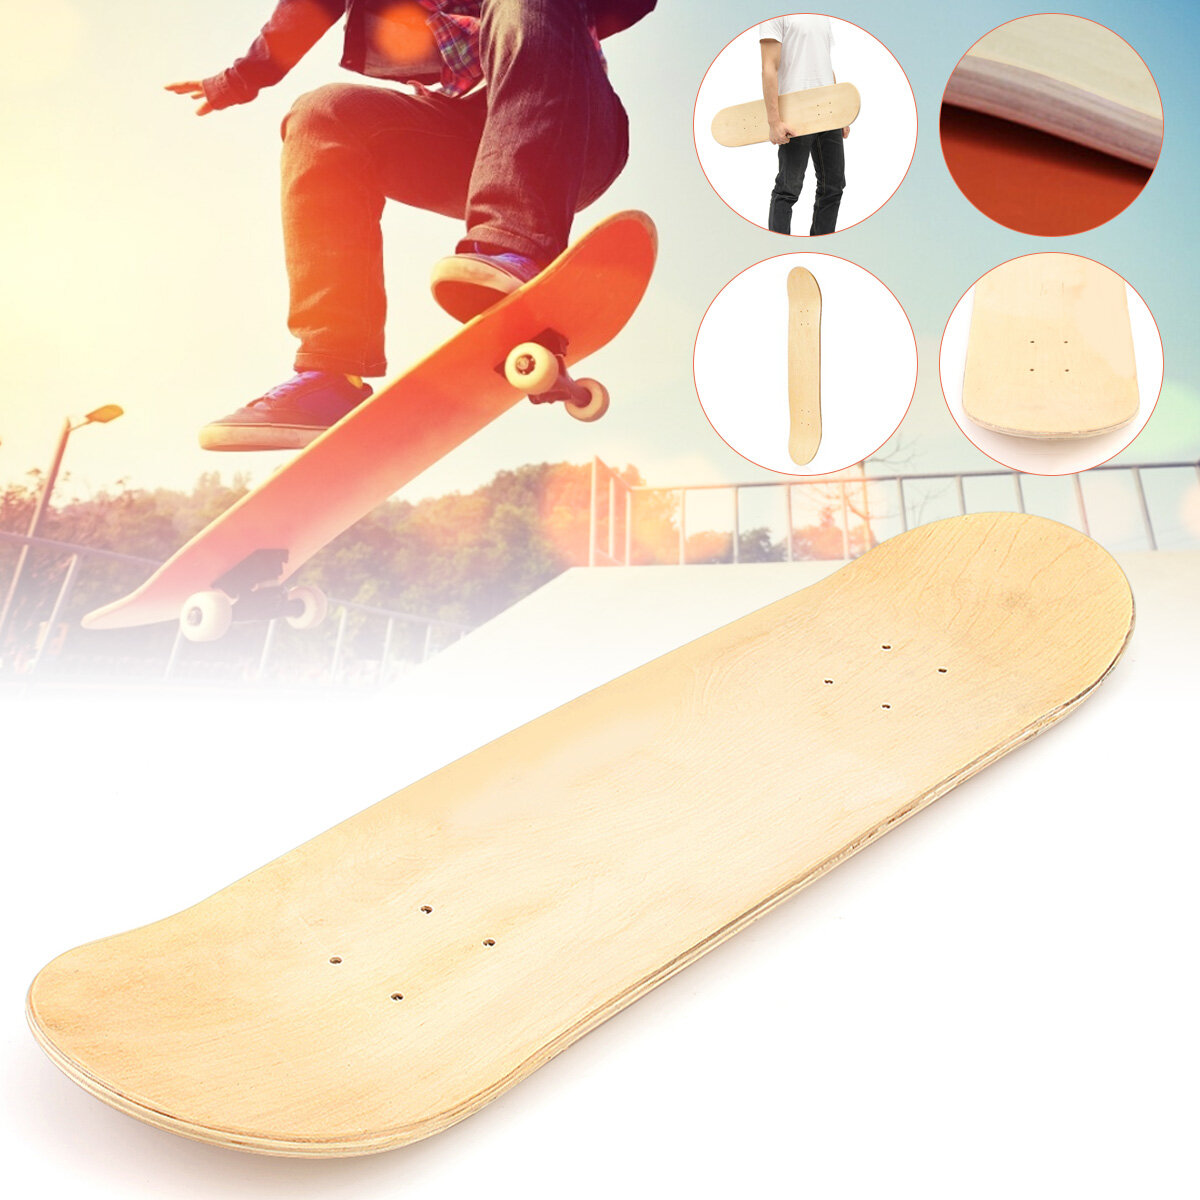 Blankes doppelt gewölbtes konkaves Deck aus naturbelassenem Holz für DIY-Skateboard